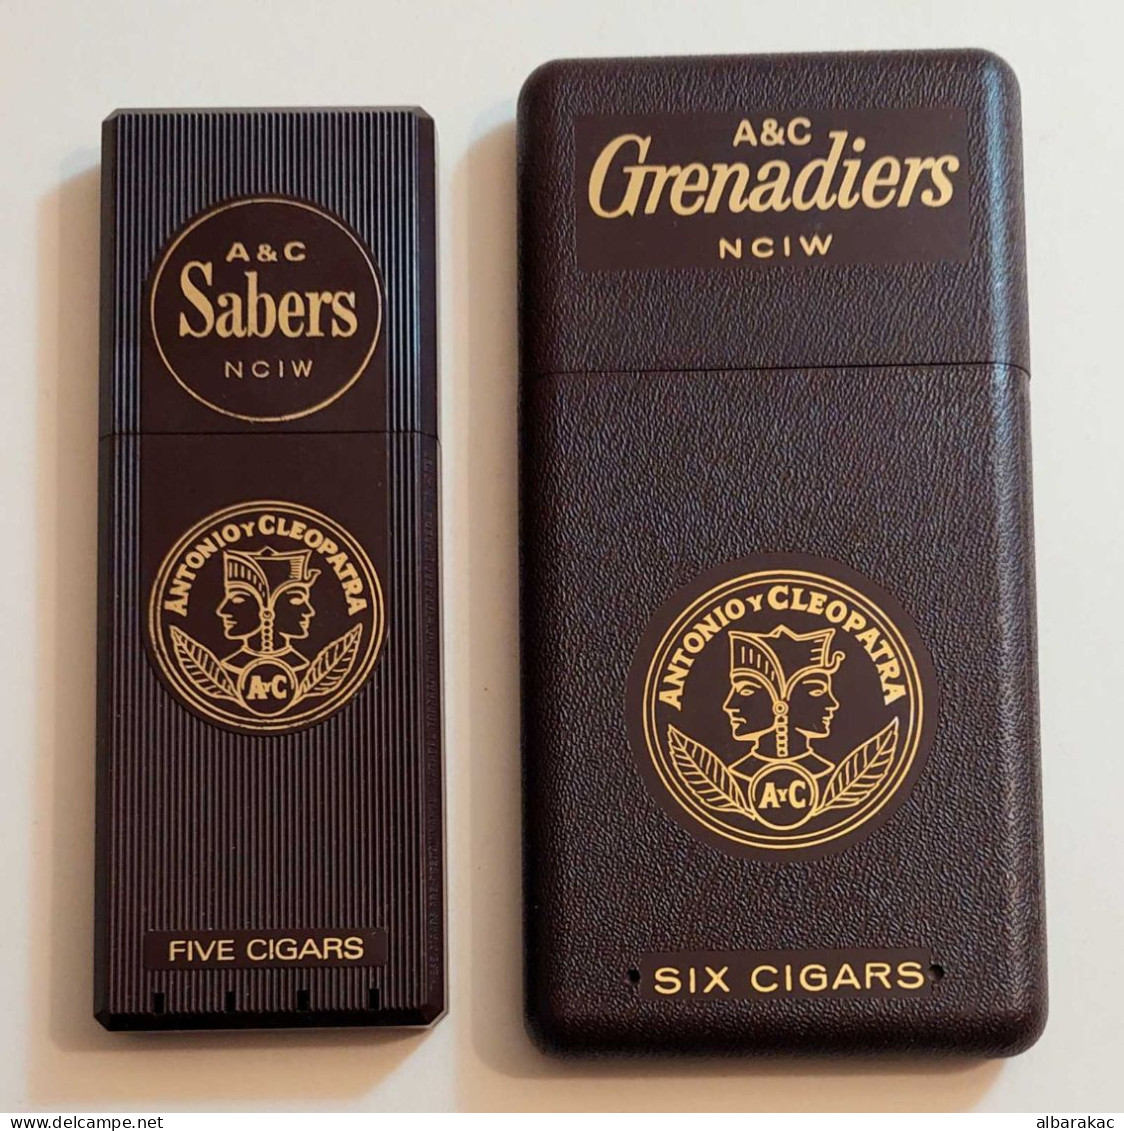 USA Ciagrette Grenadiers A&C Sabers Box Plastic Case - Empty Cigarettes Boxes